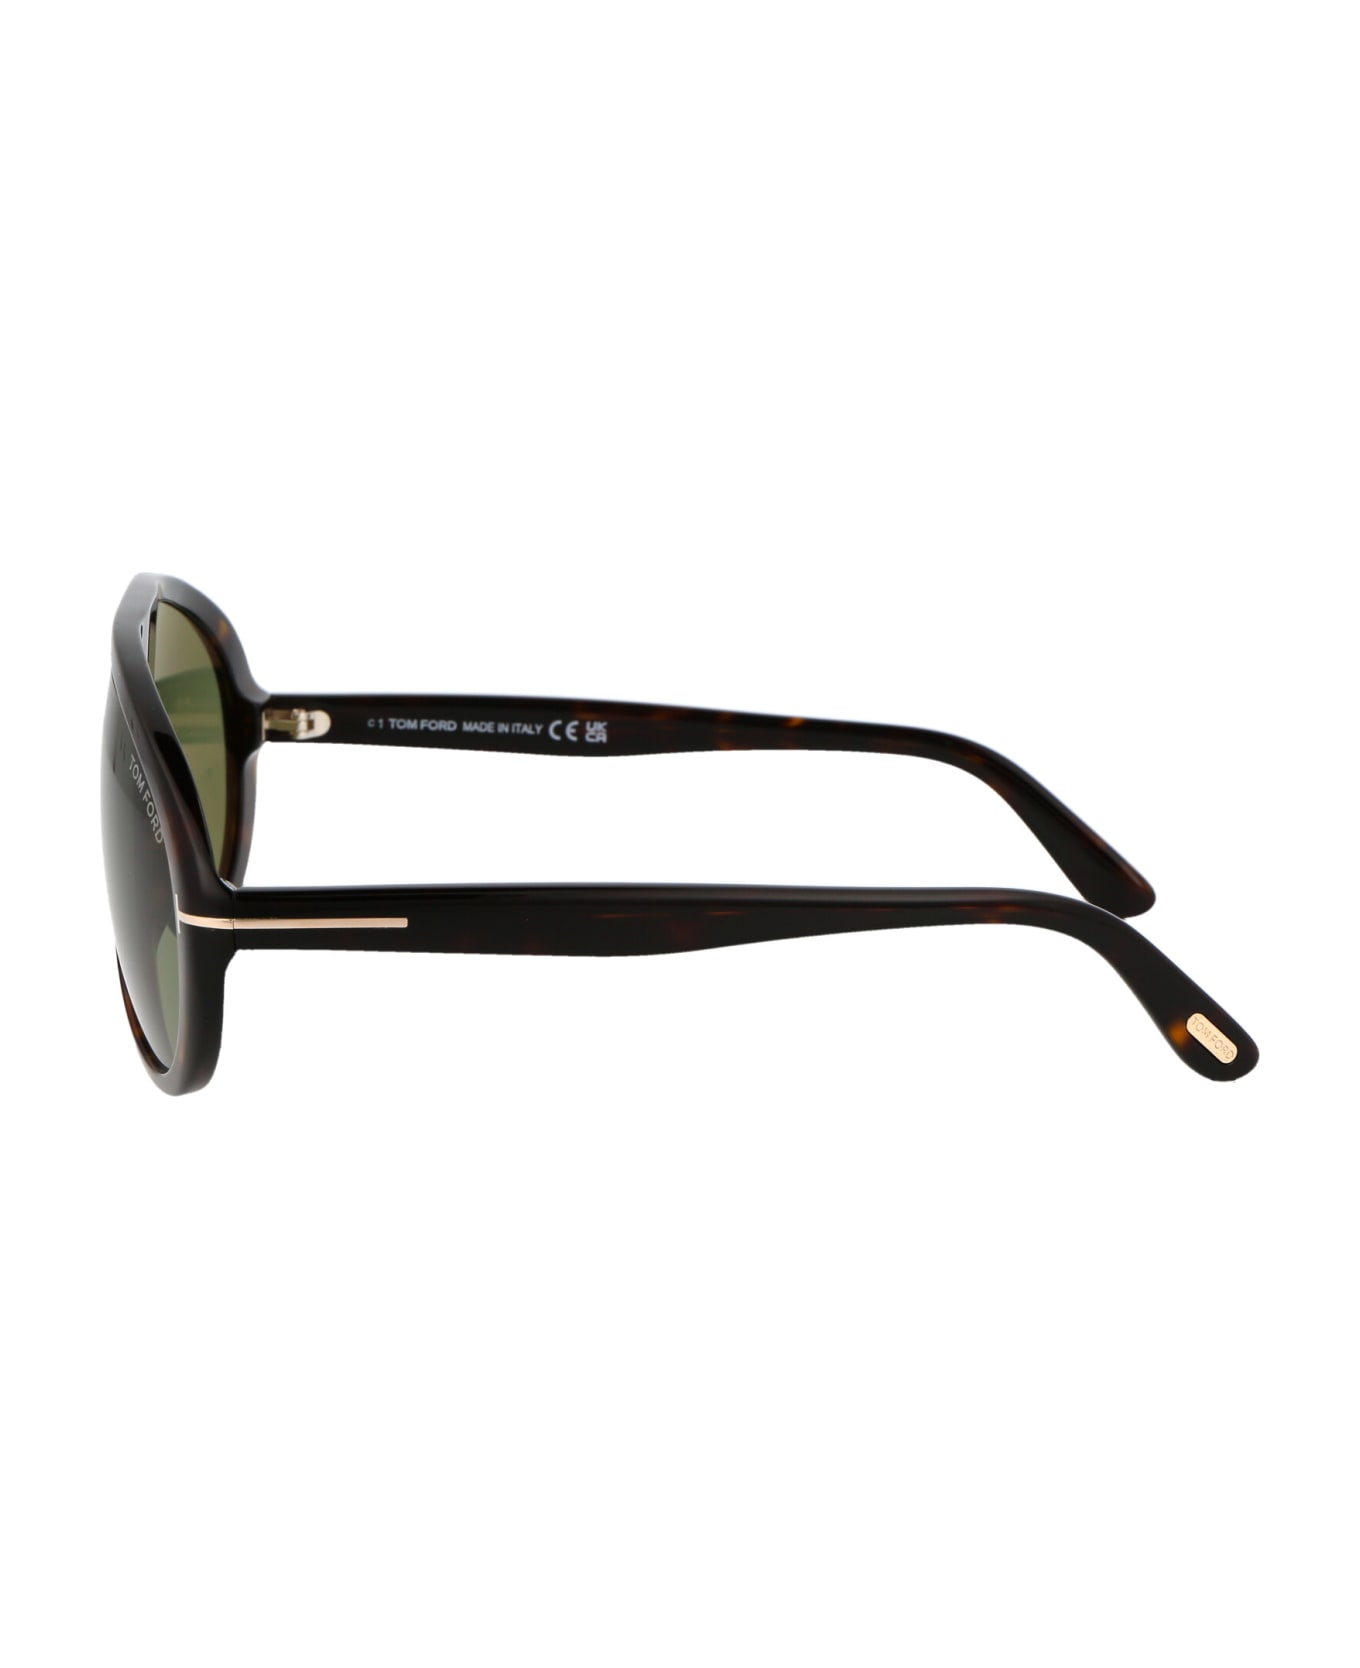 Tom Ford Eyewear Ft0988 Sunglasses - 52N HAVANA